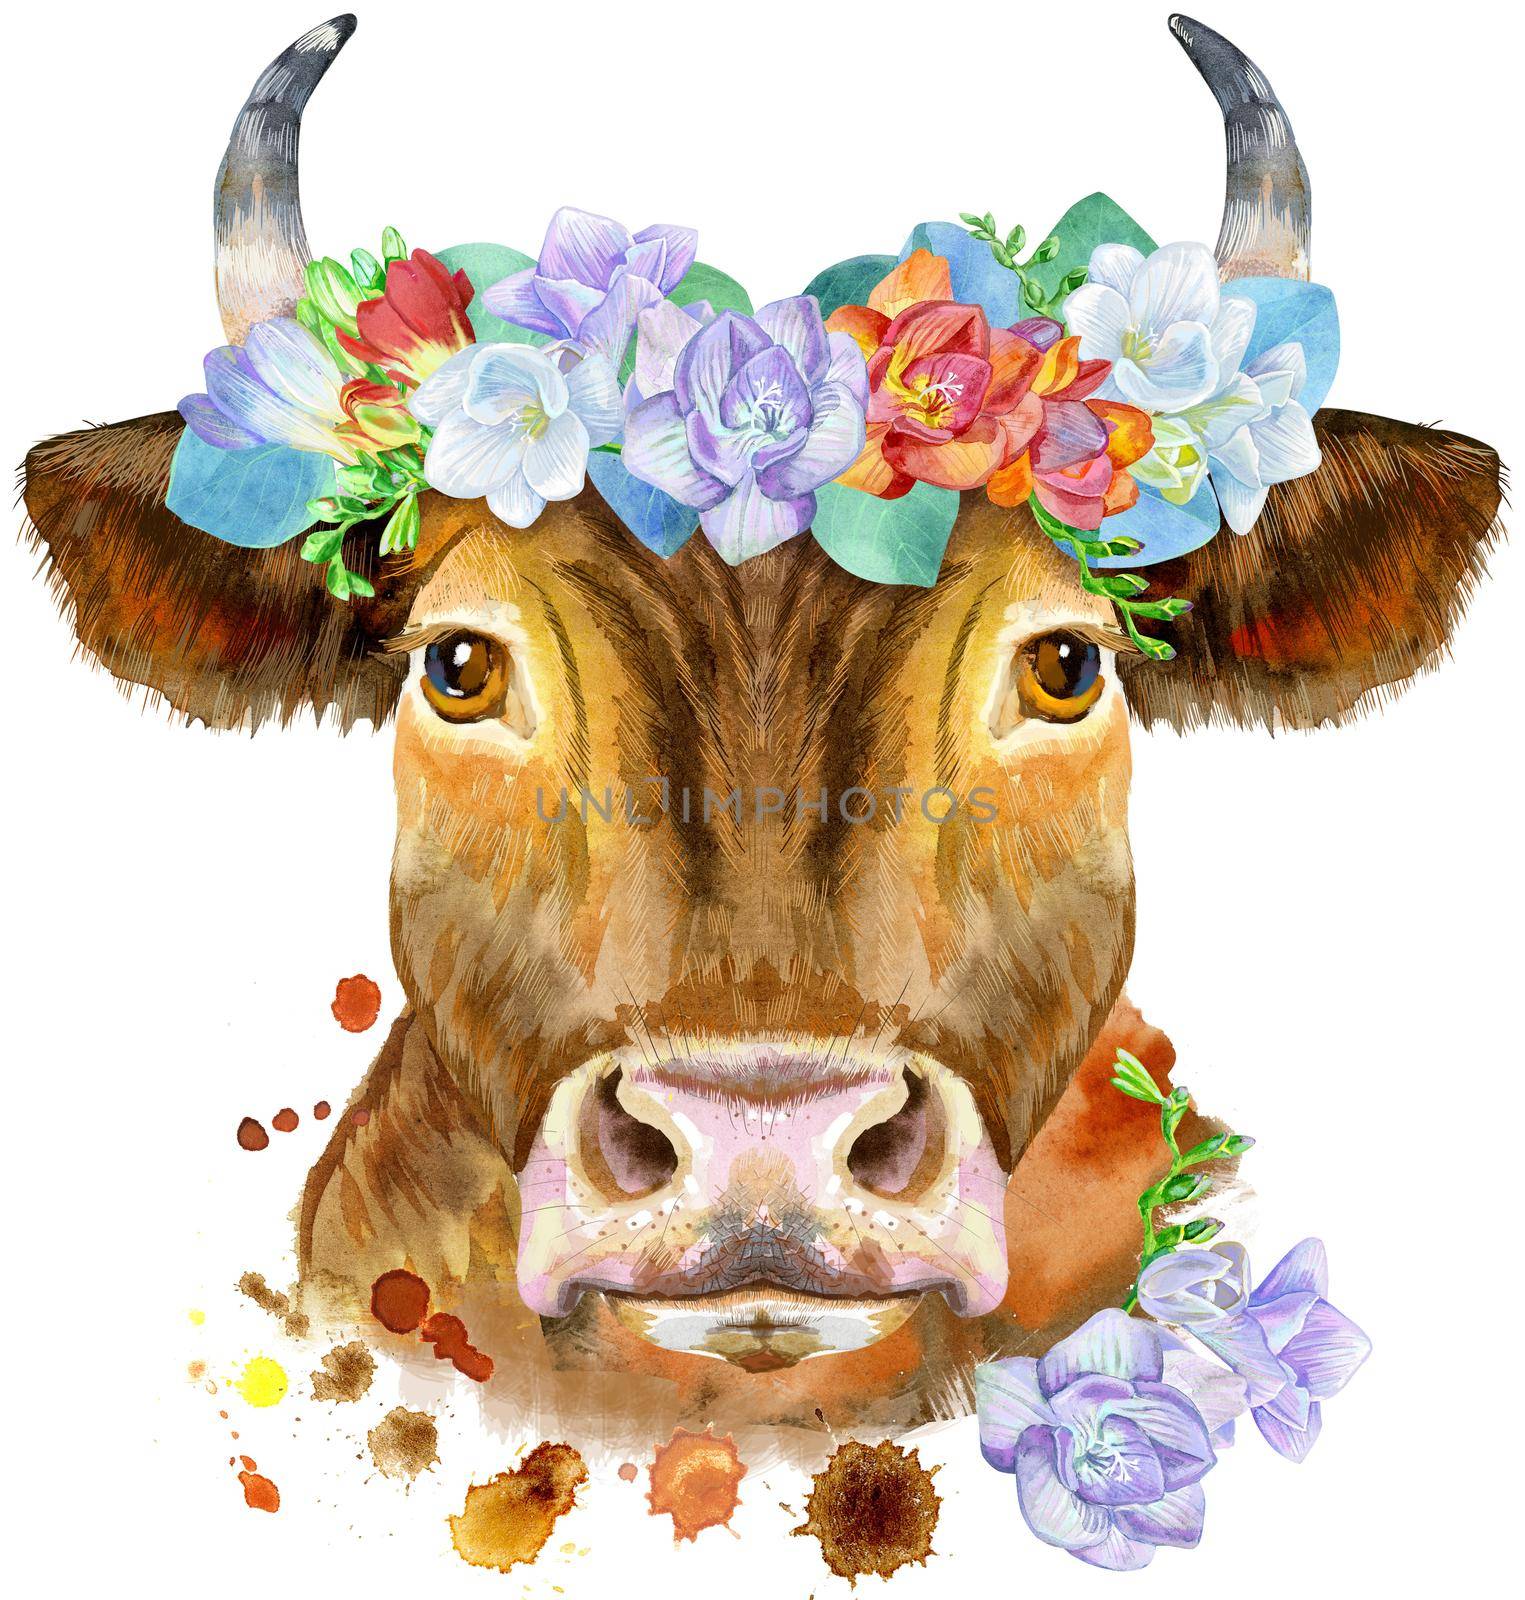 Bull watercolor graphics in wreath of freesia. Bull animal illustration with splash.